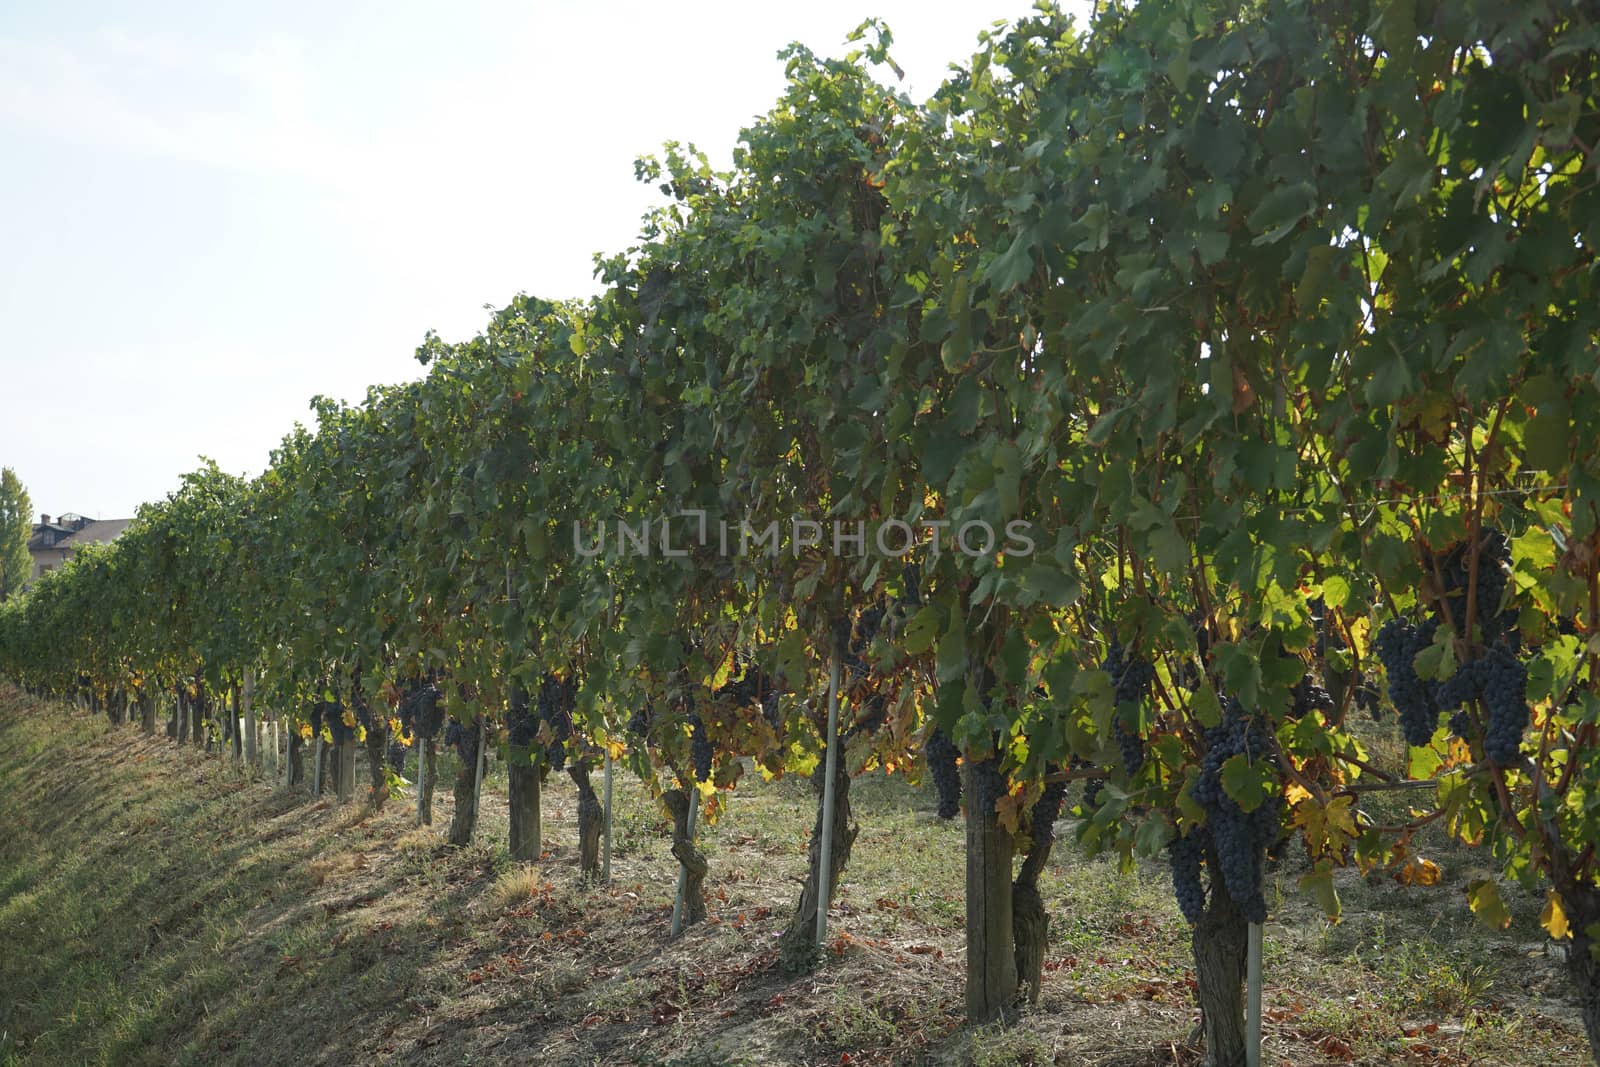 Vineyards around Barolo, Piedmont - Italy by cosca